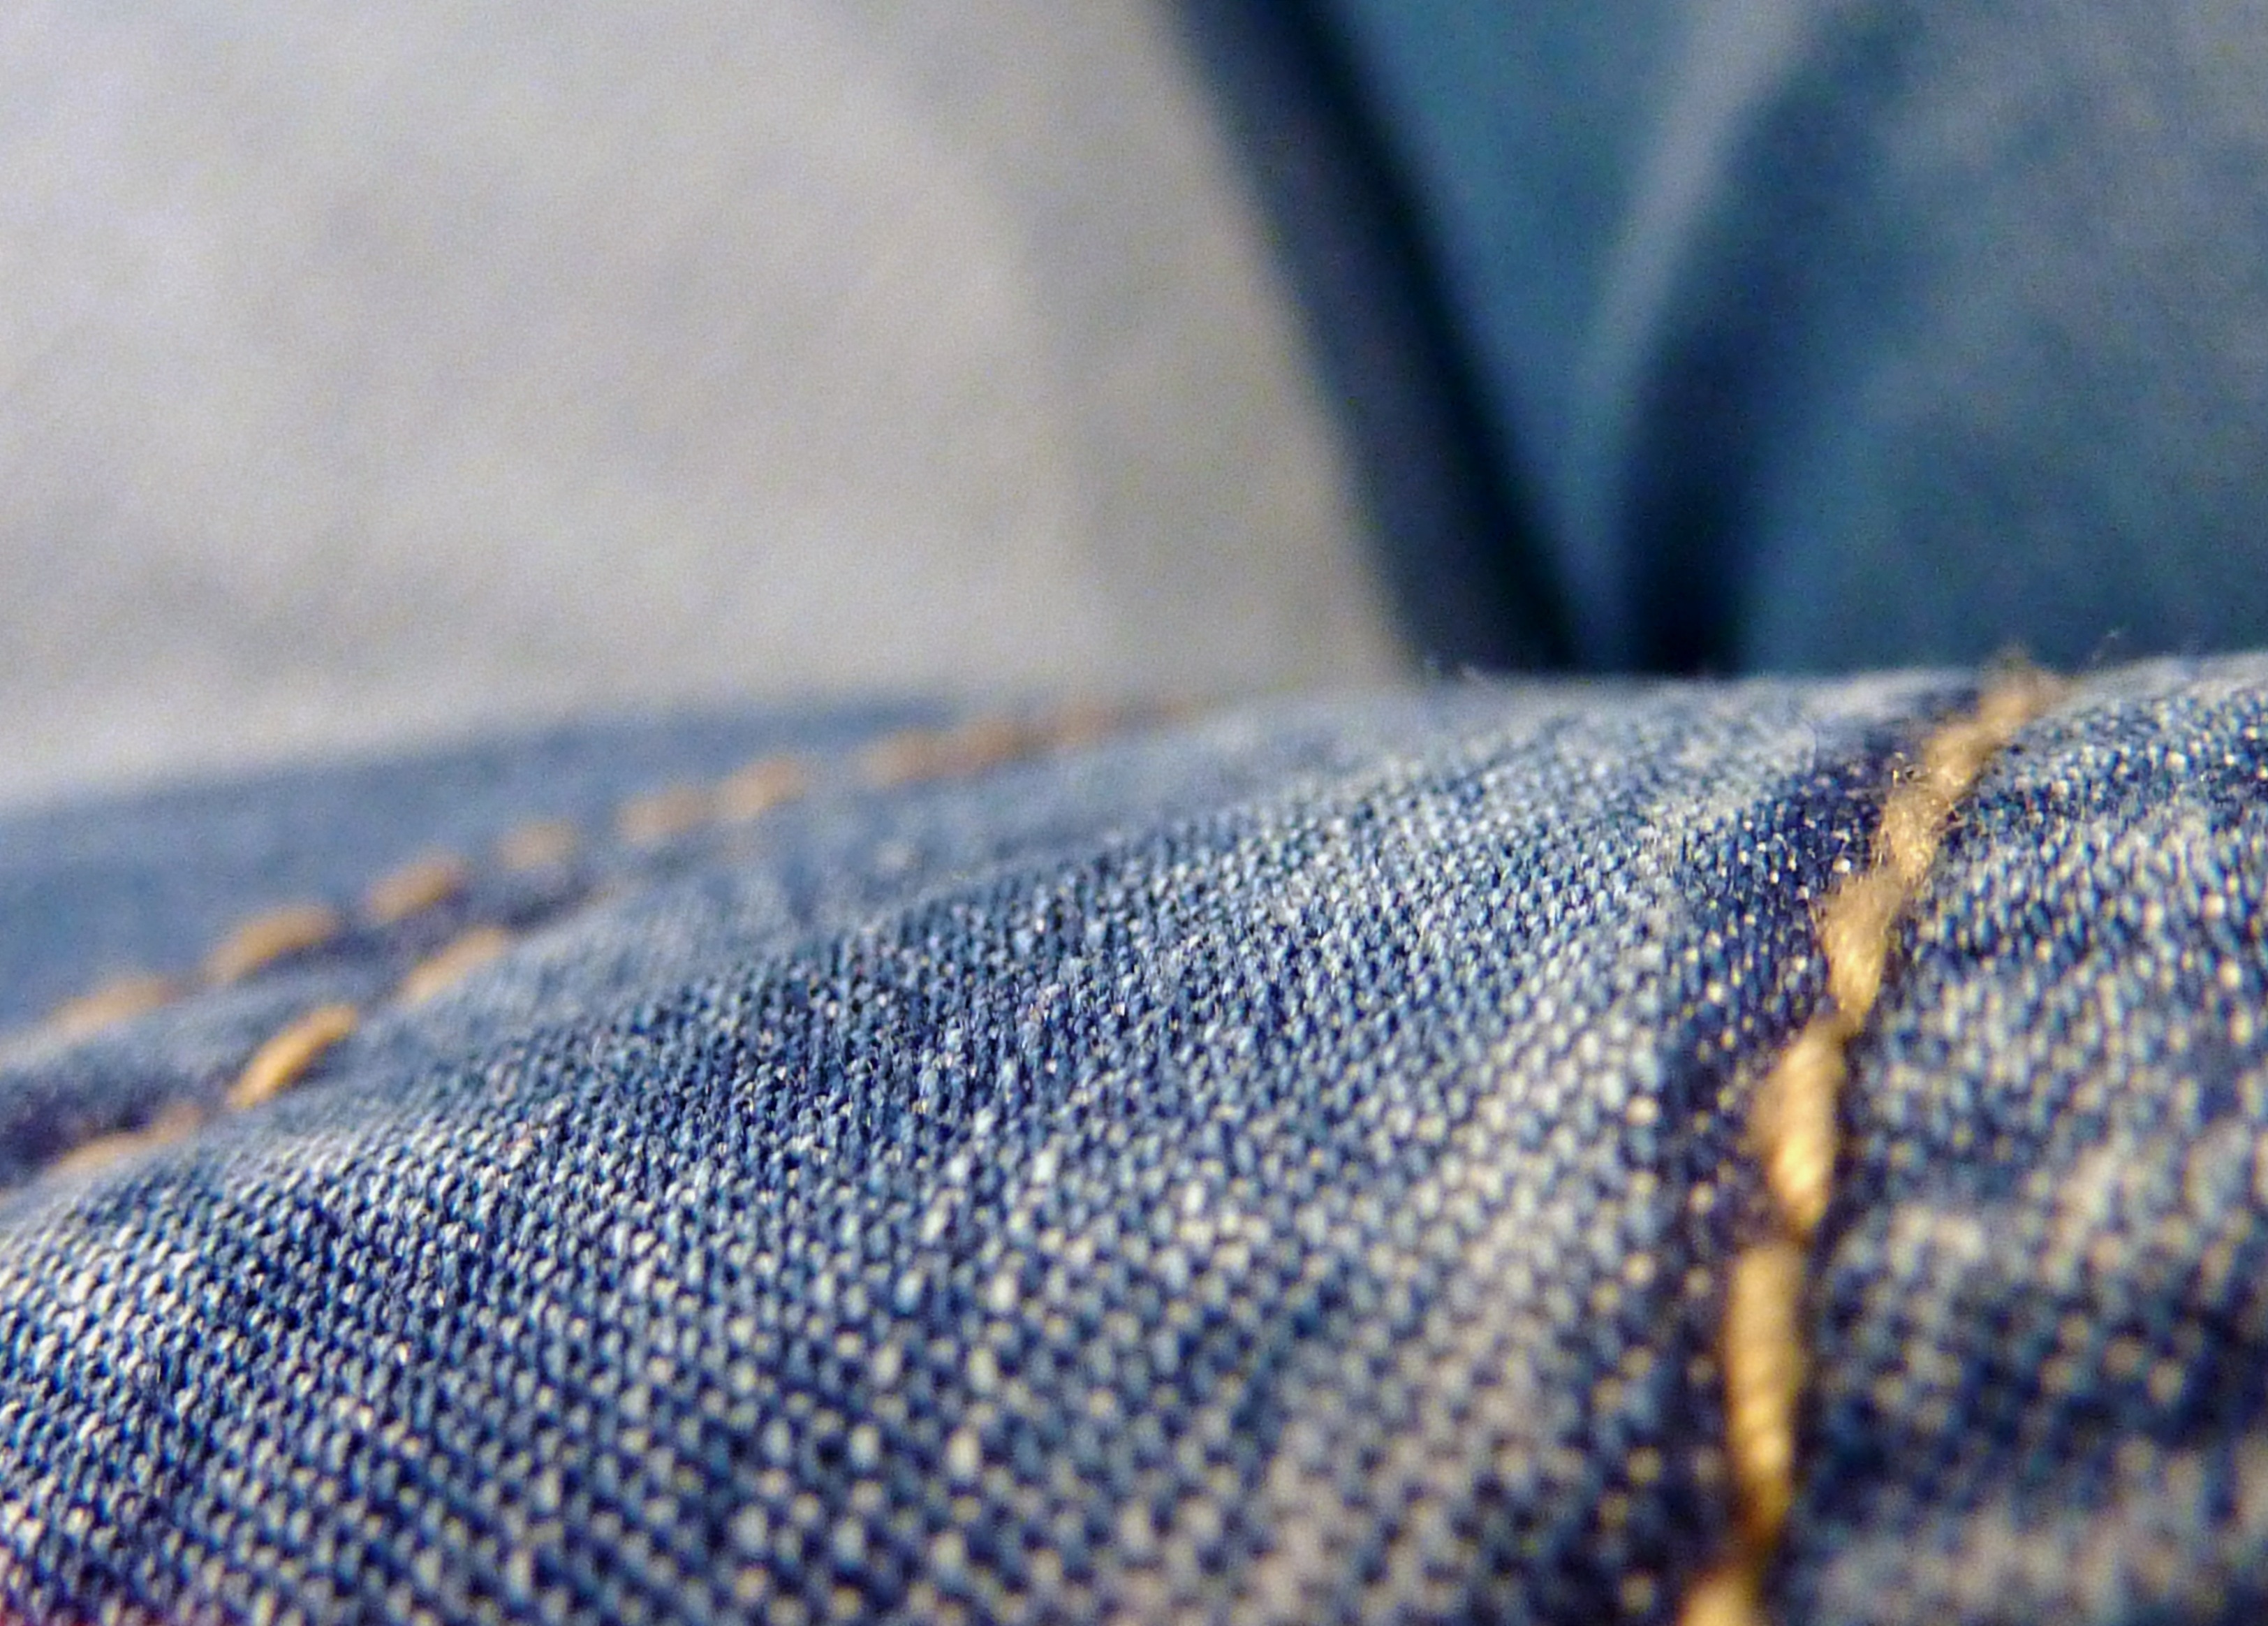 Материалы джинсы